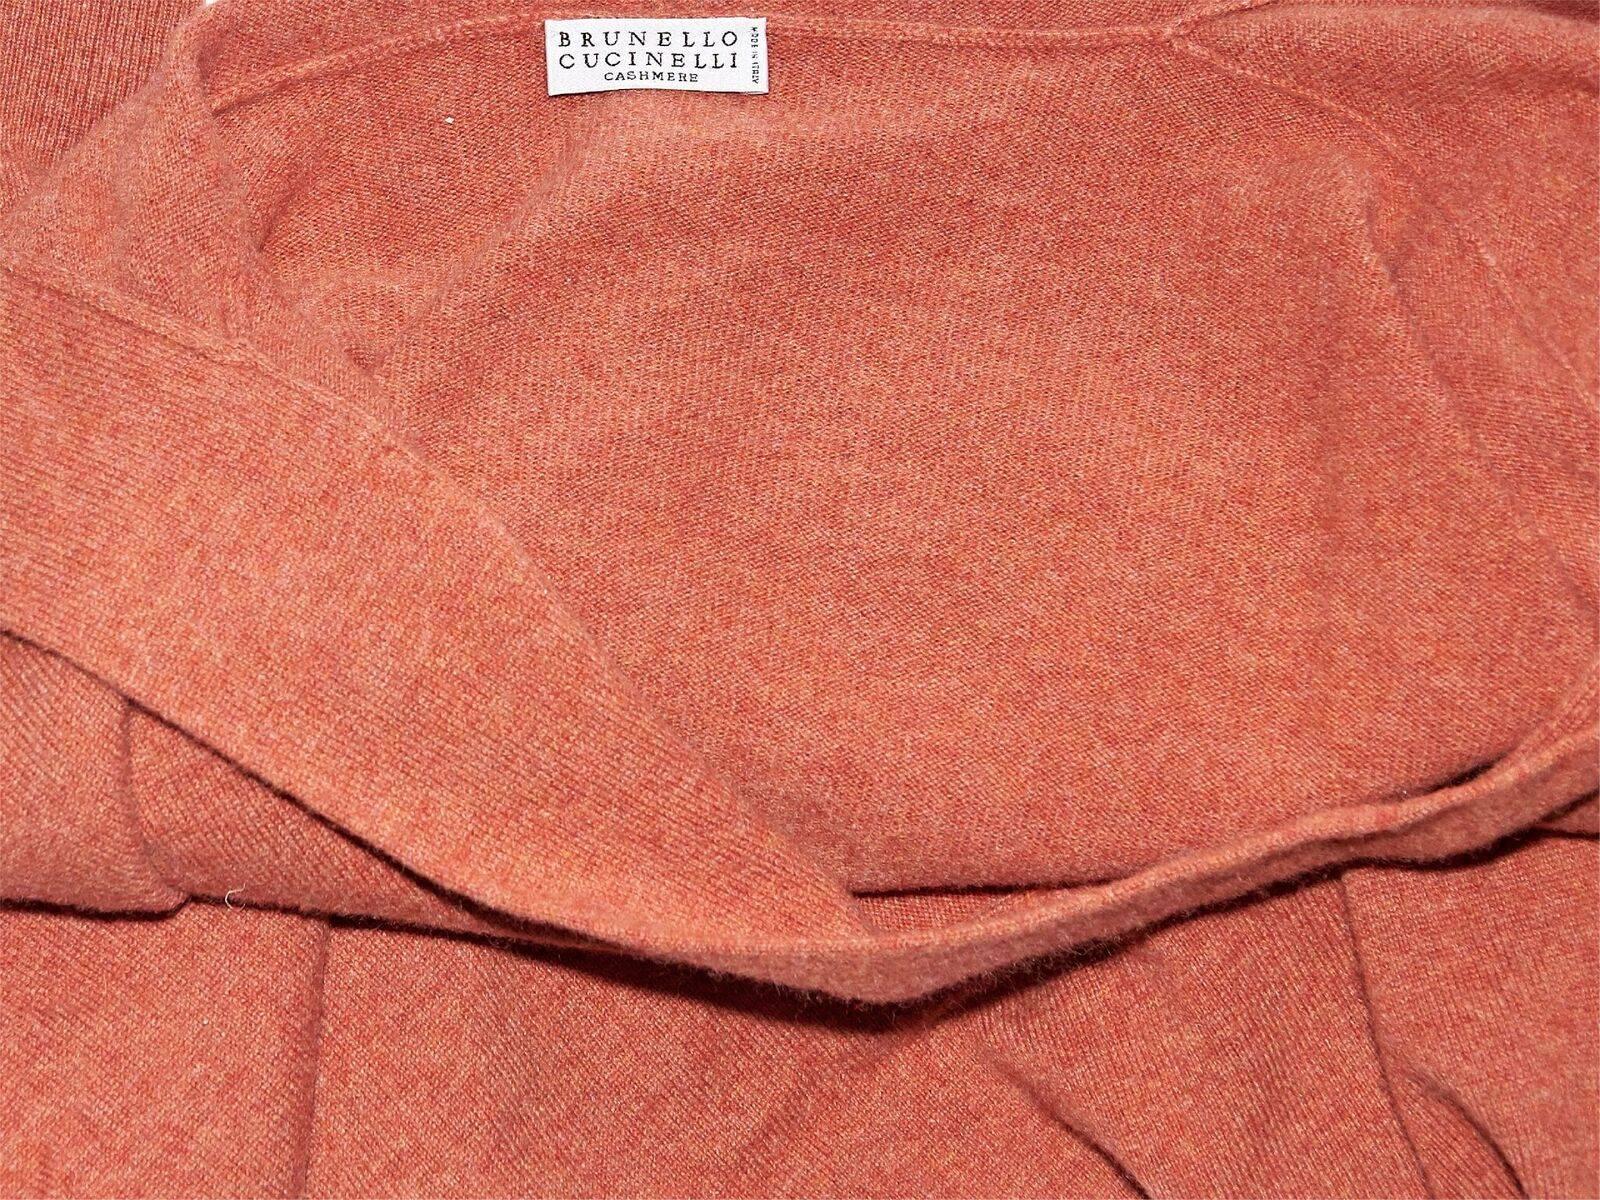 Women's Orange Brunello Cucinelli Cashmere Hooded Sweater